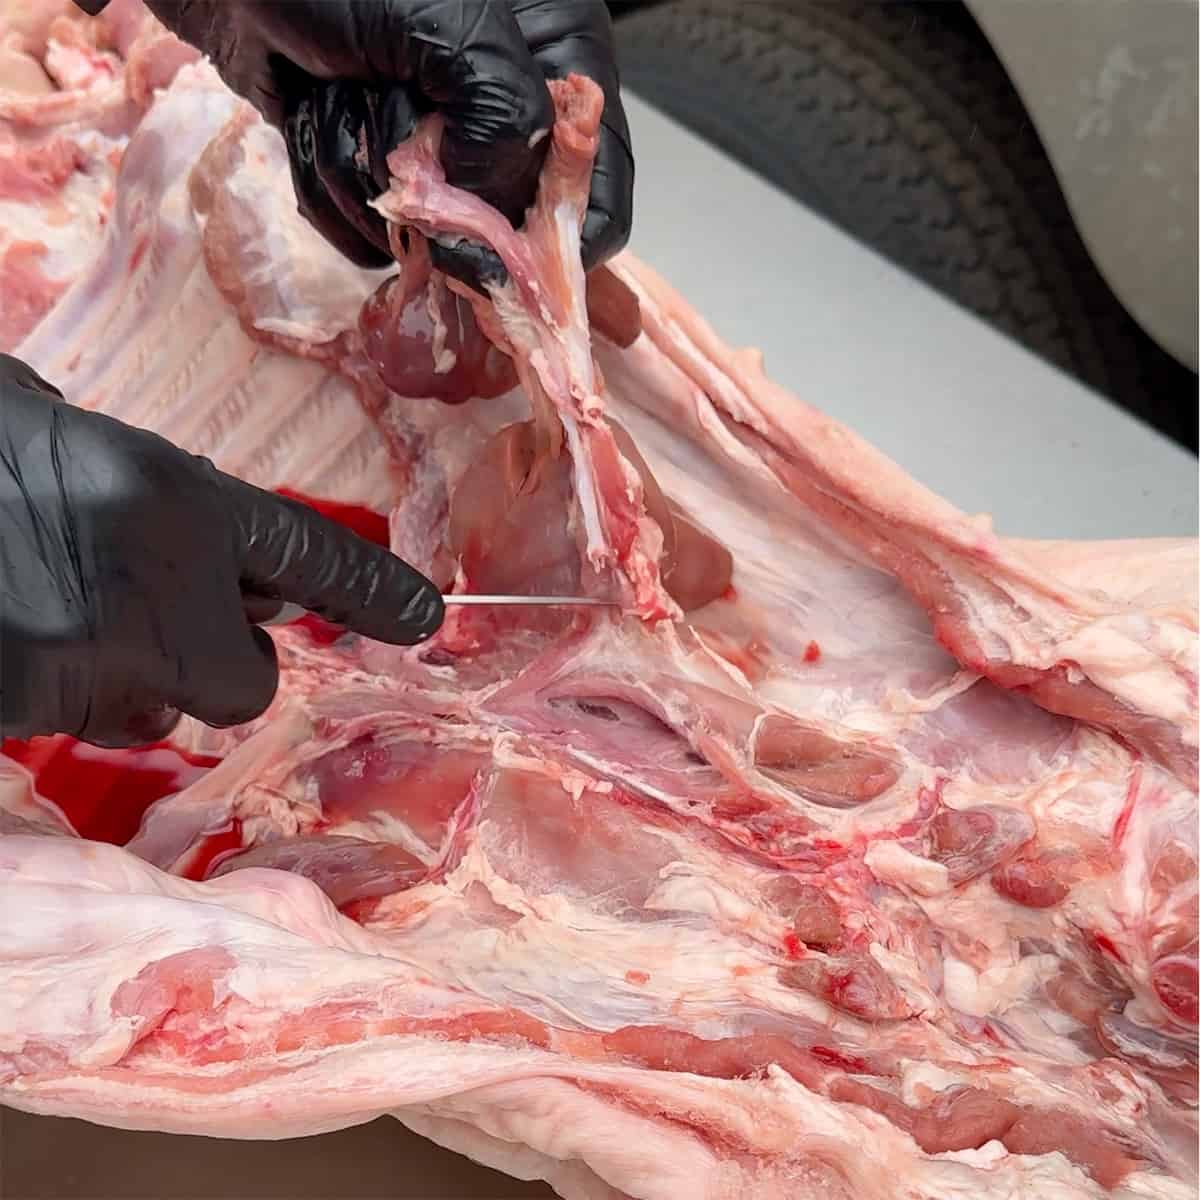 Removing vein from hog near spine.